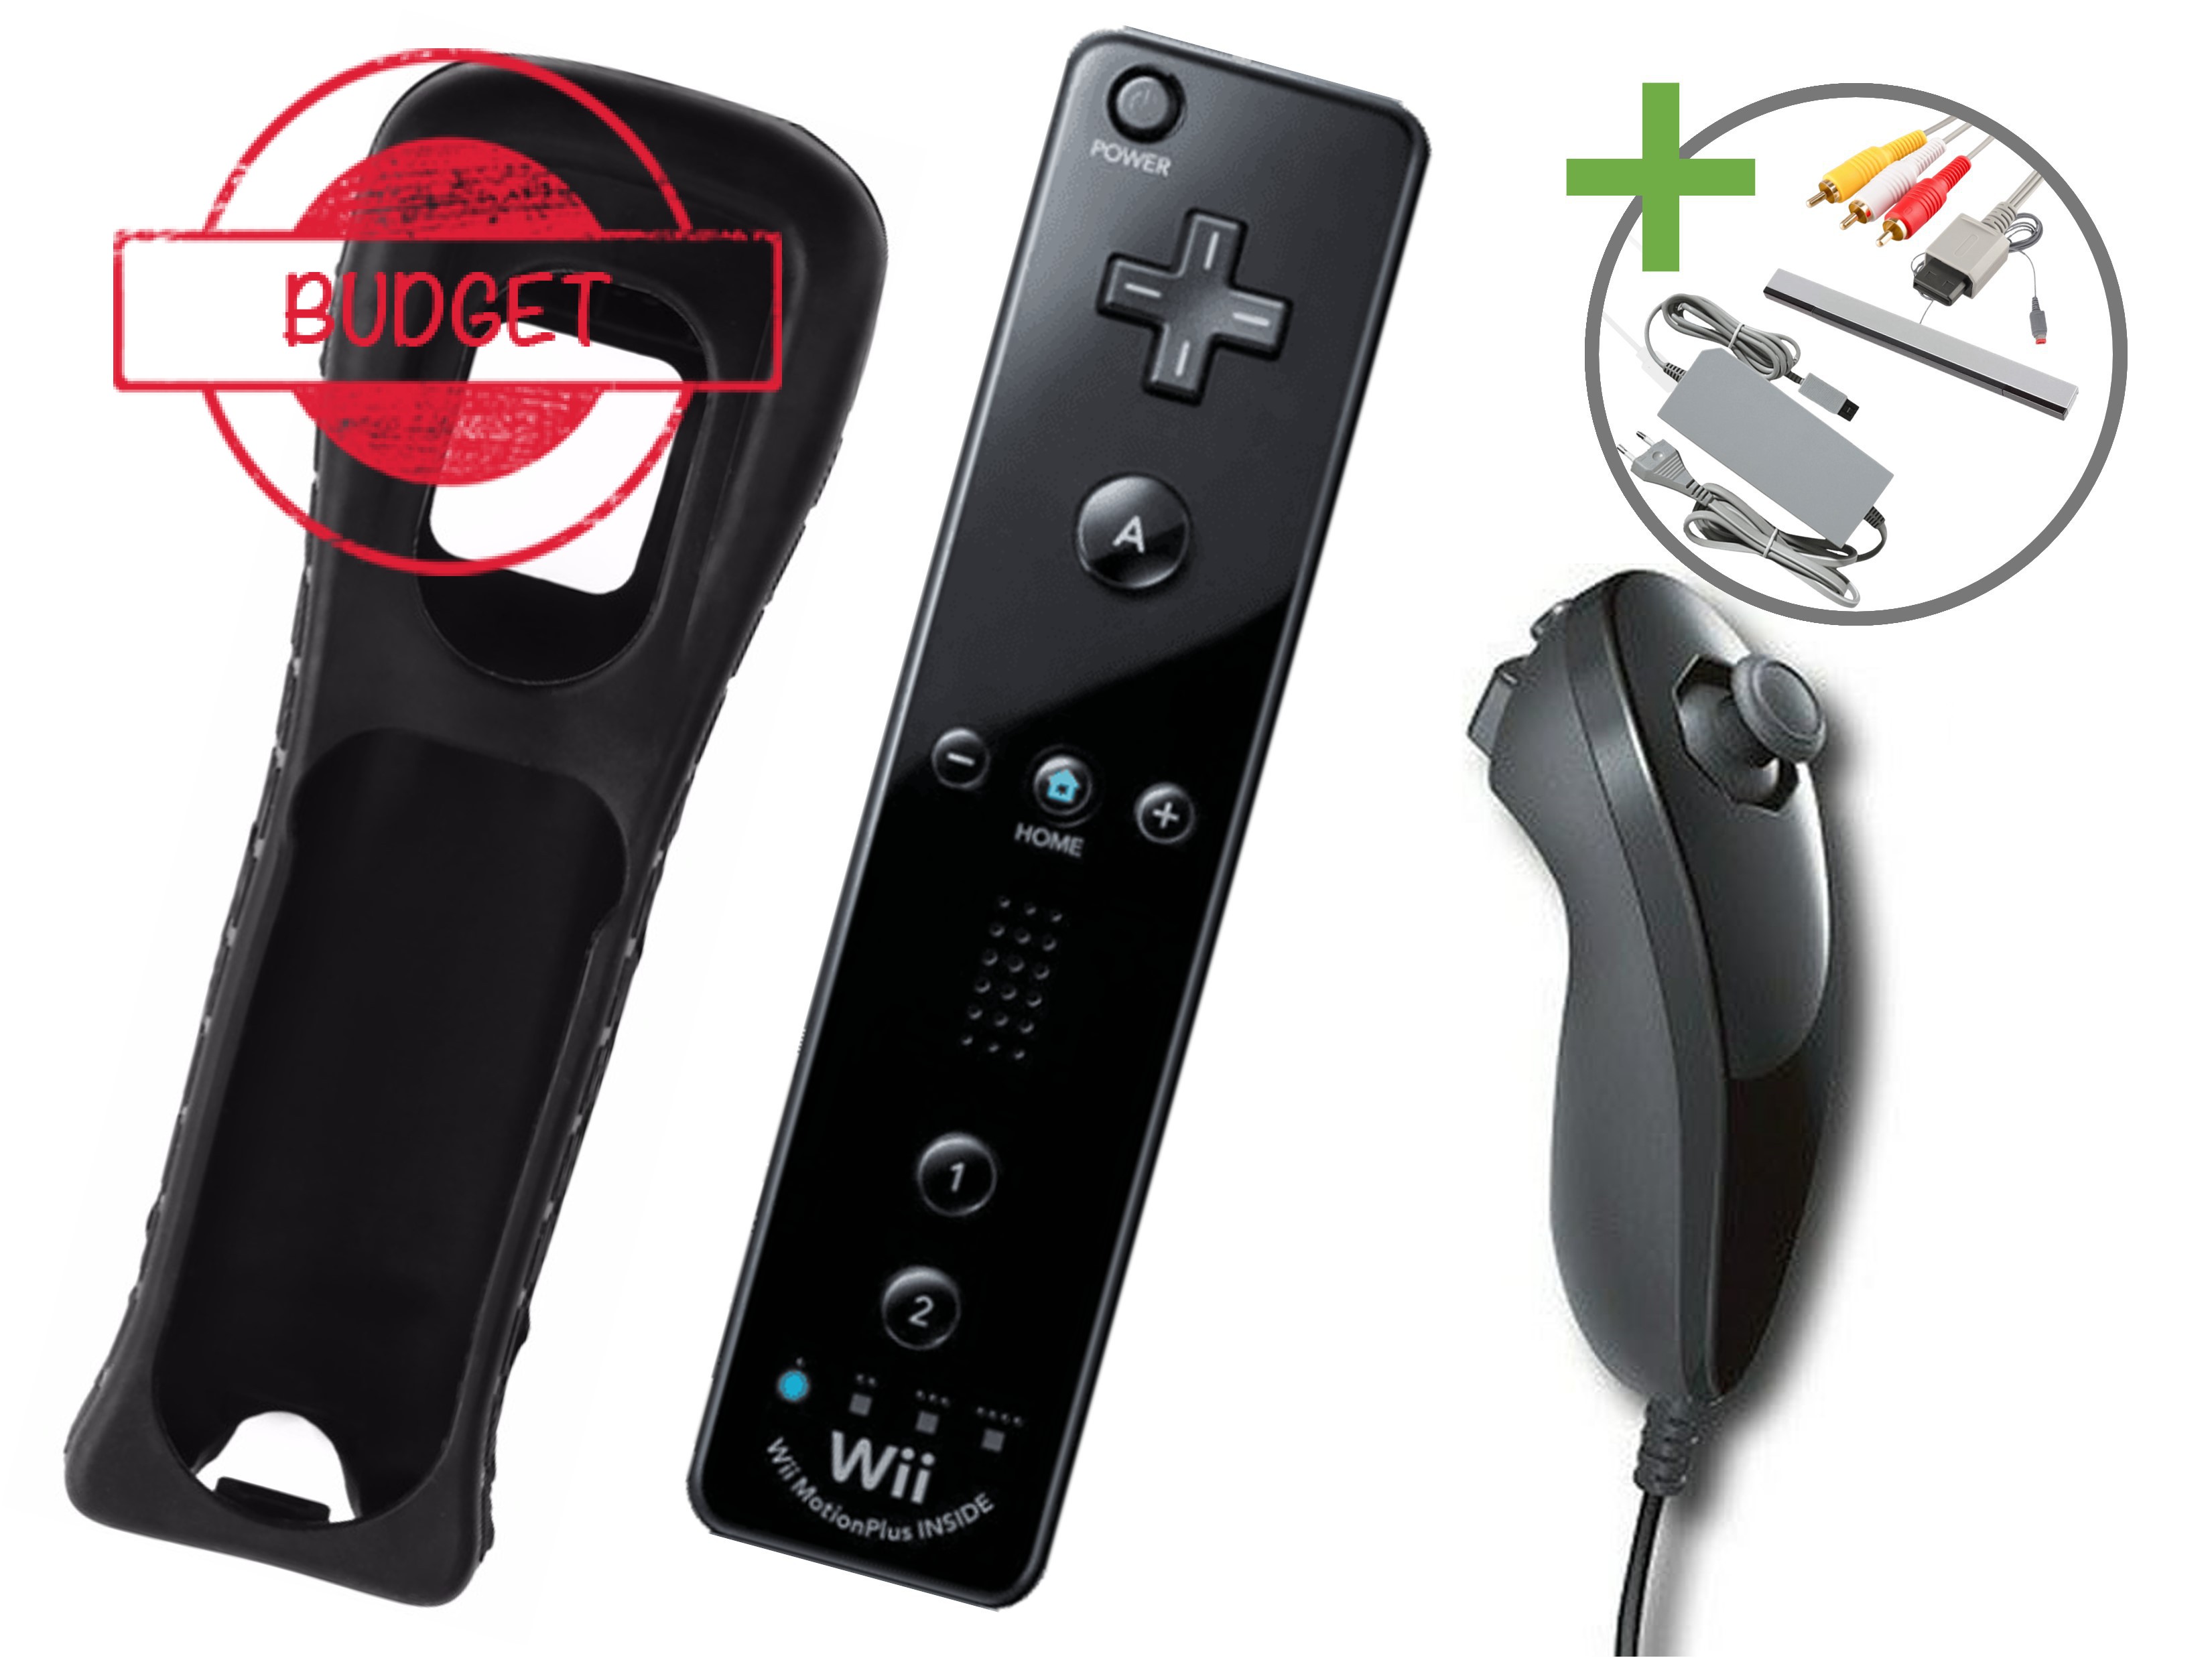 Nintendo Wii Mini Starter Pack - Motion Plus Black Edition - Budget - Wii Hardware - 3